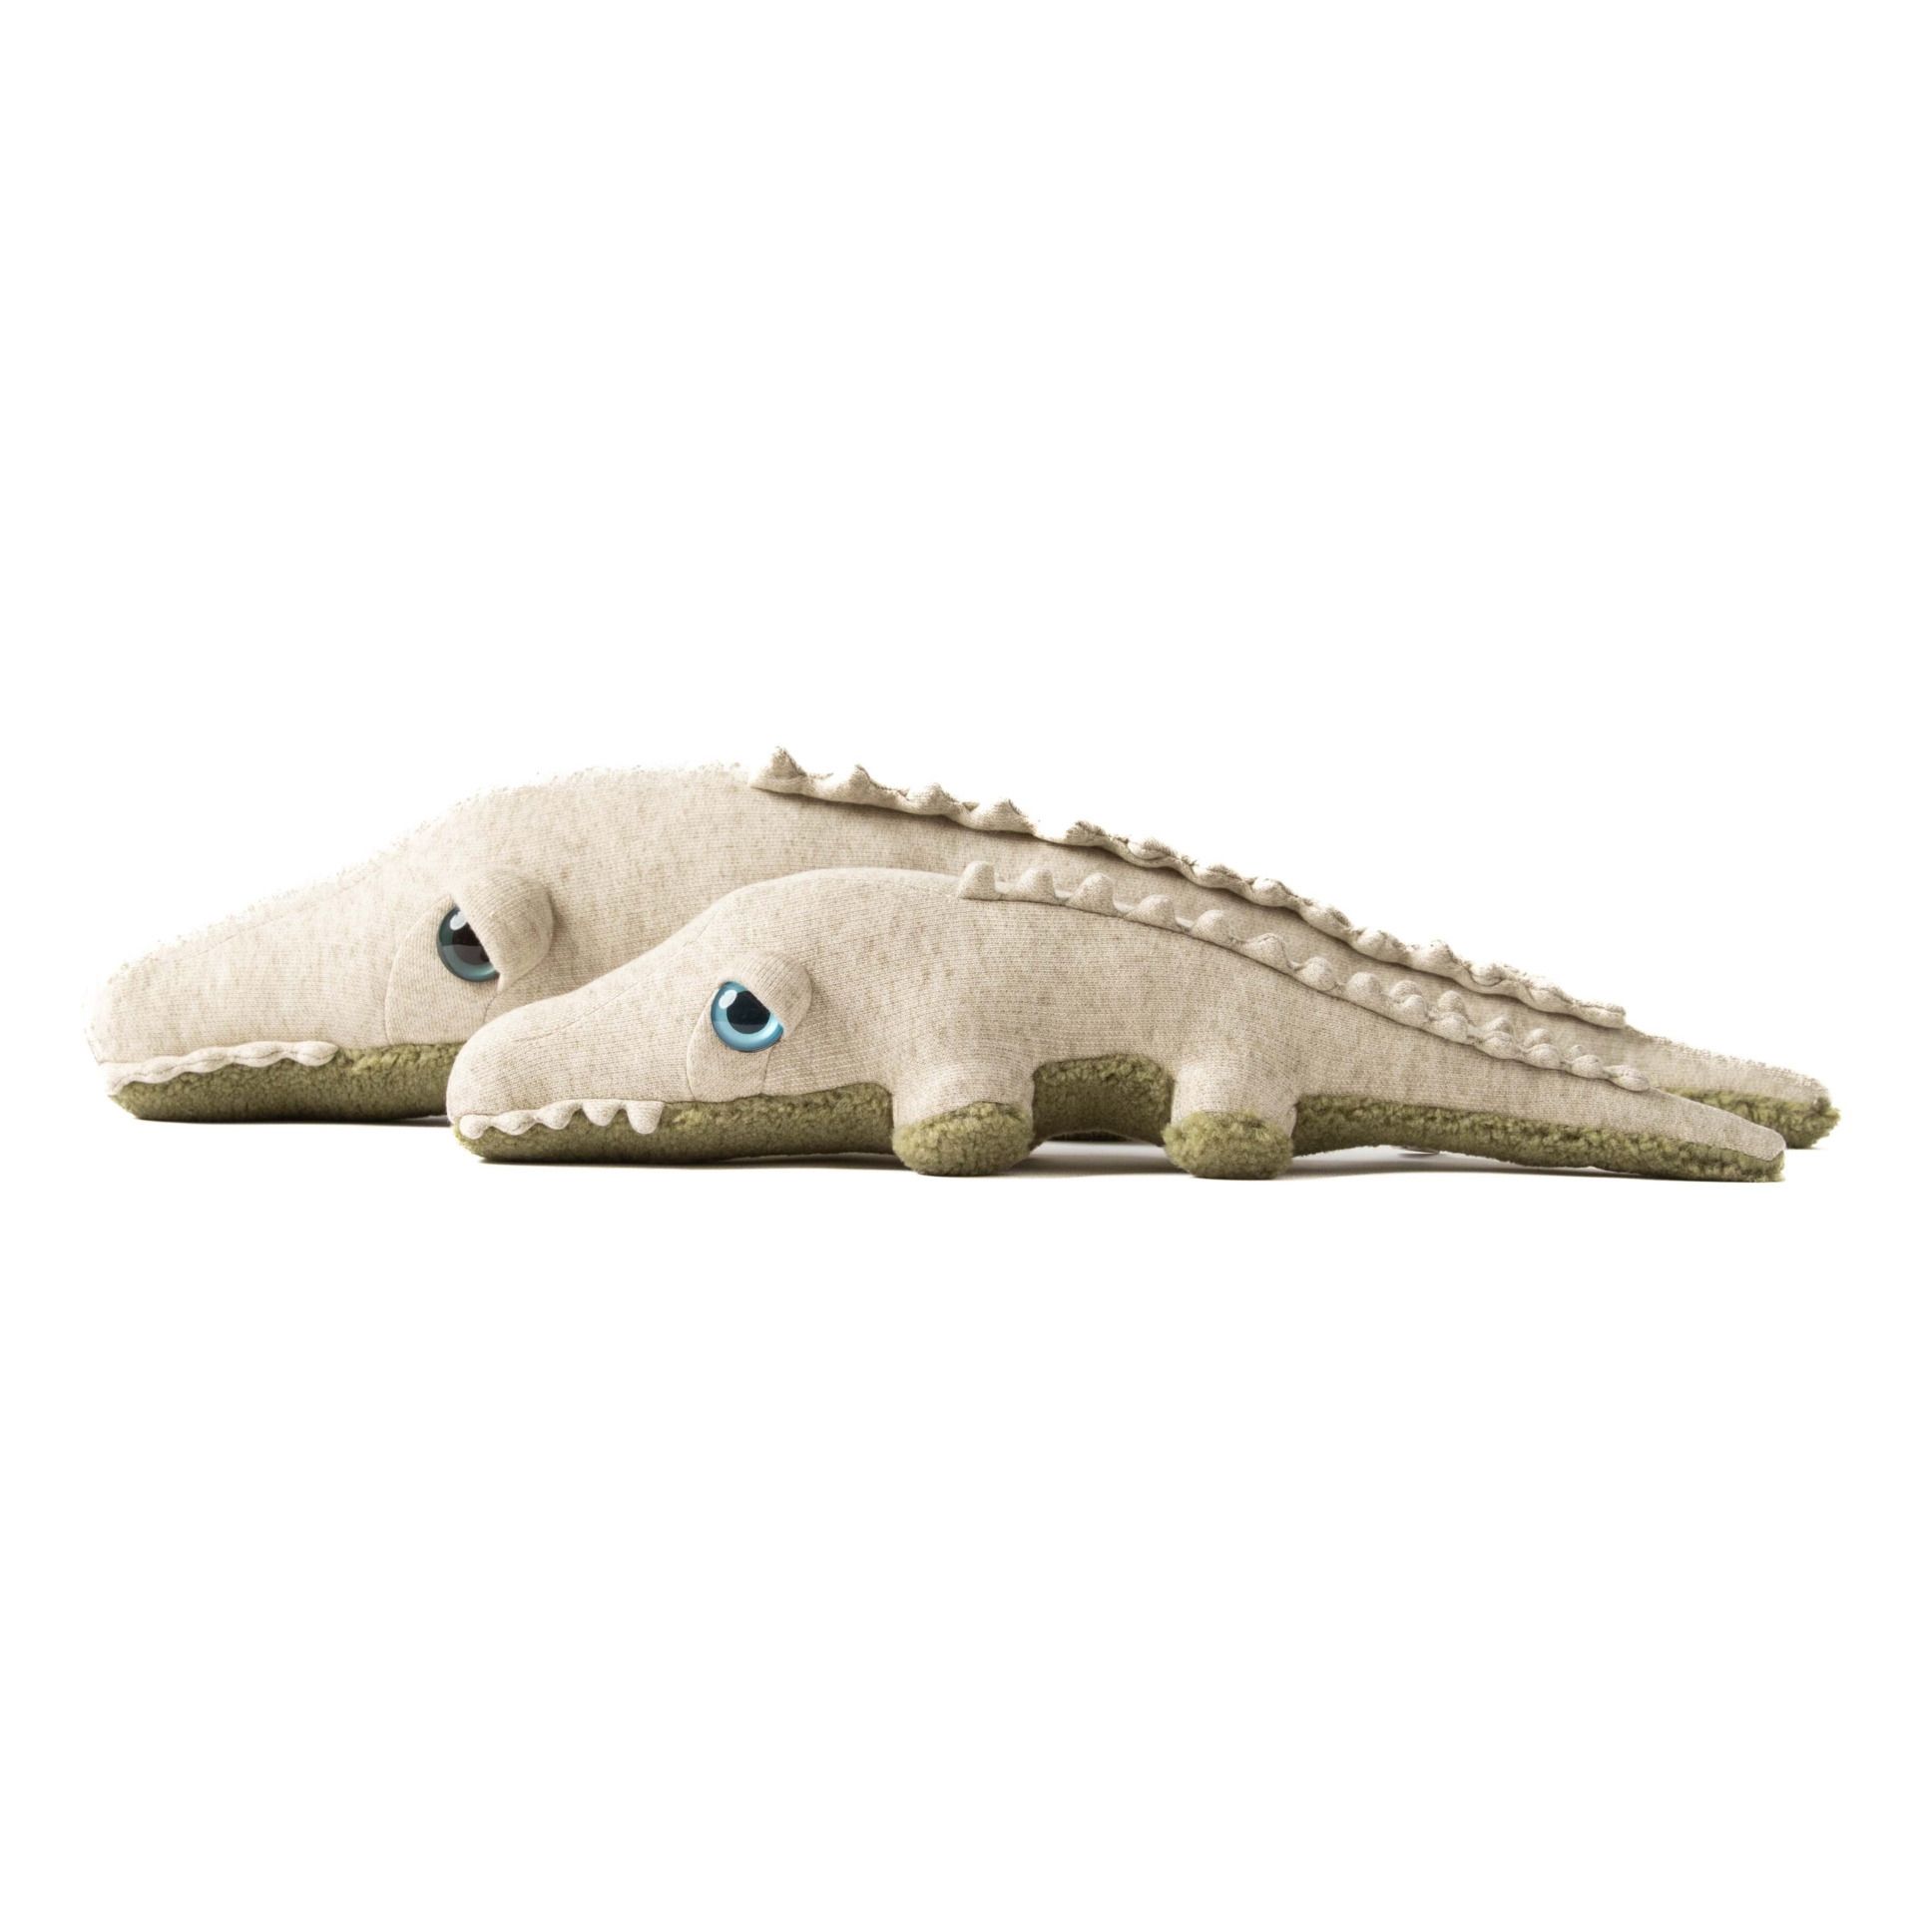 Peluche Crocodile 62cm